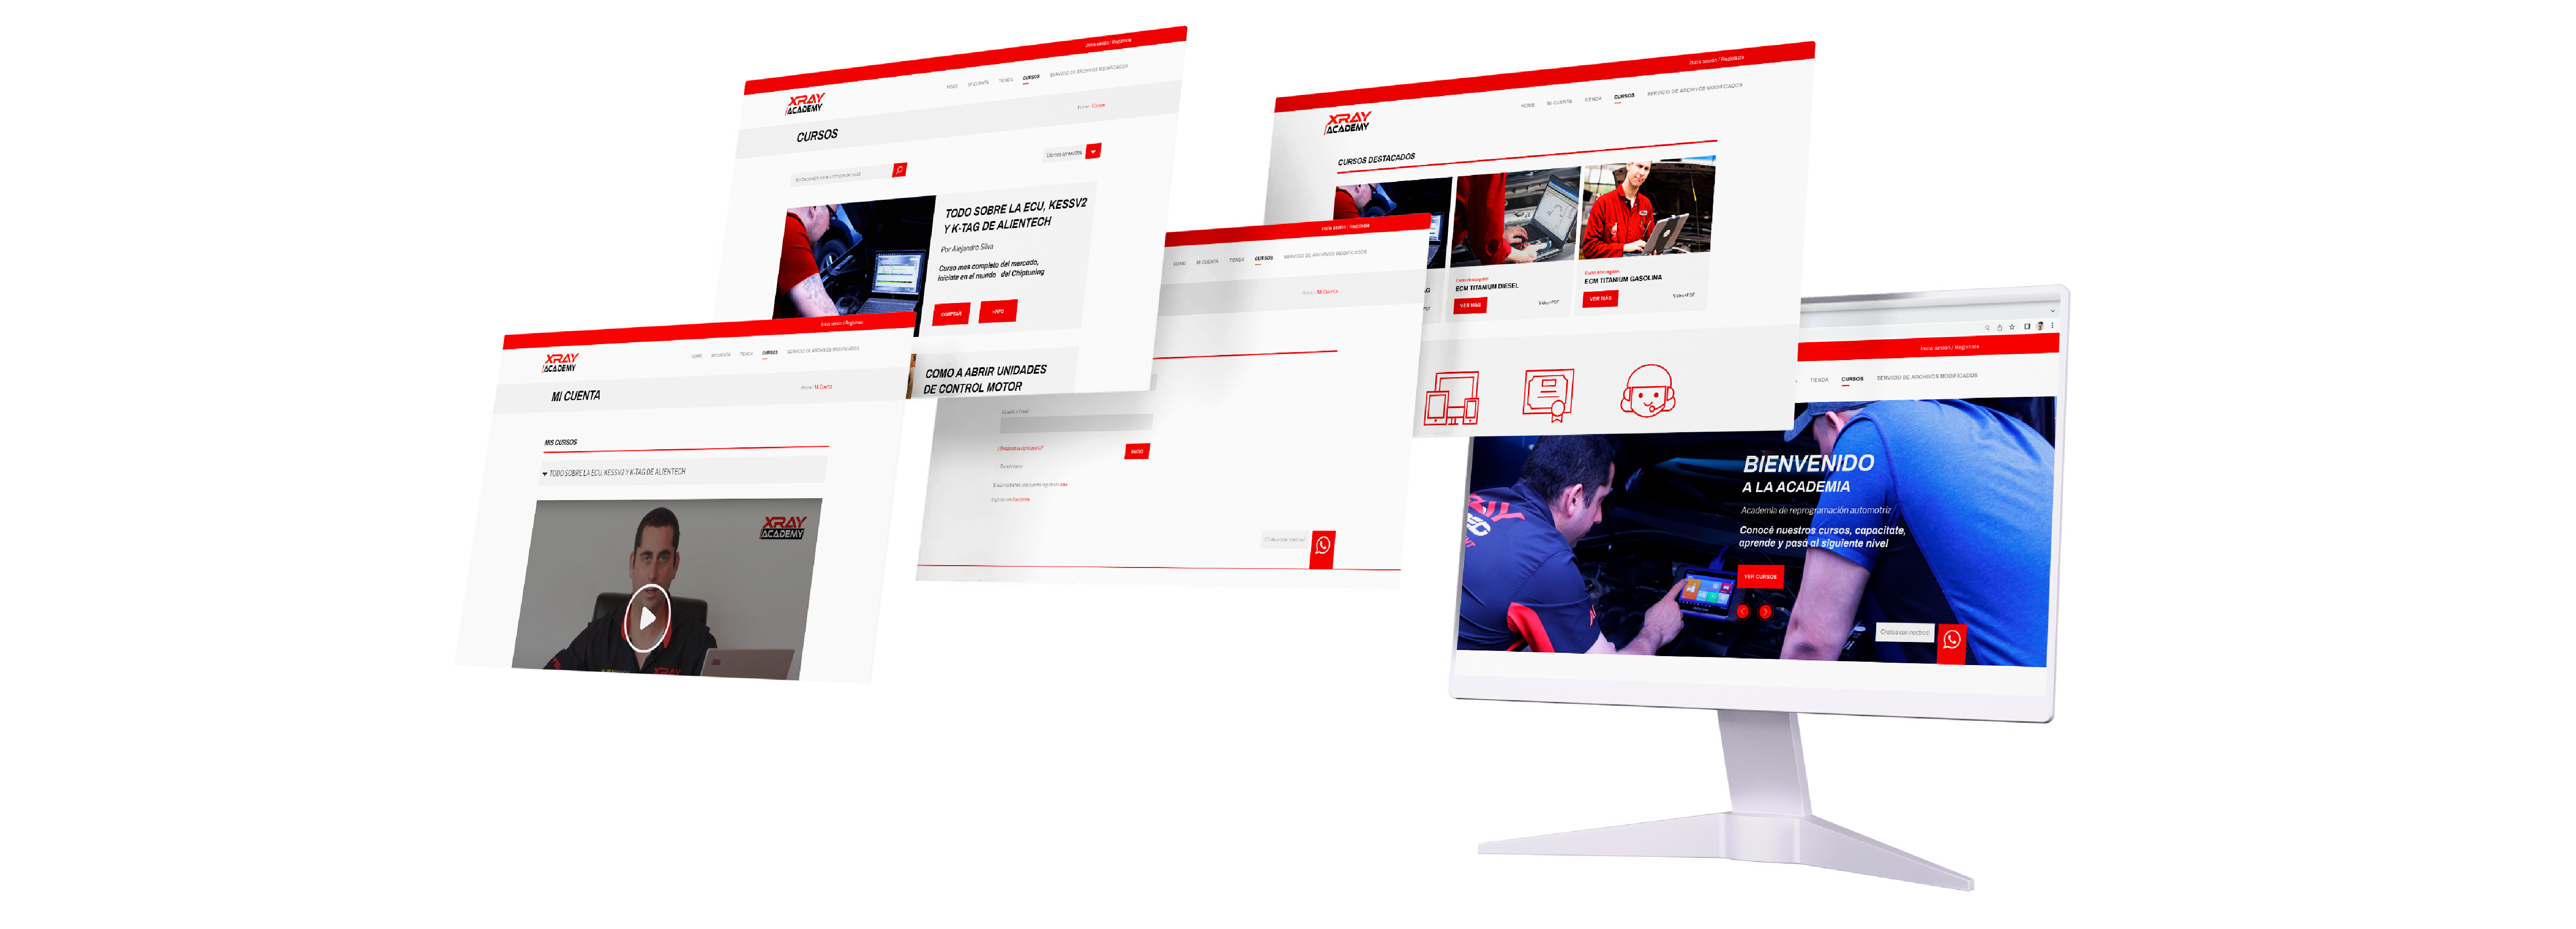 Imagen que muestra el diseño web del e-learning de la empresa.